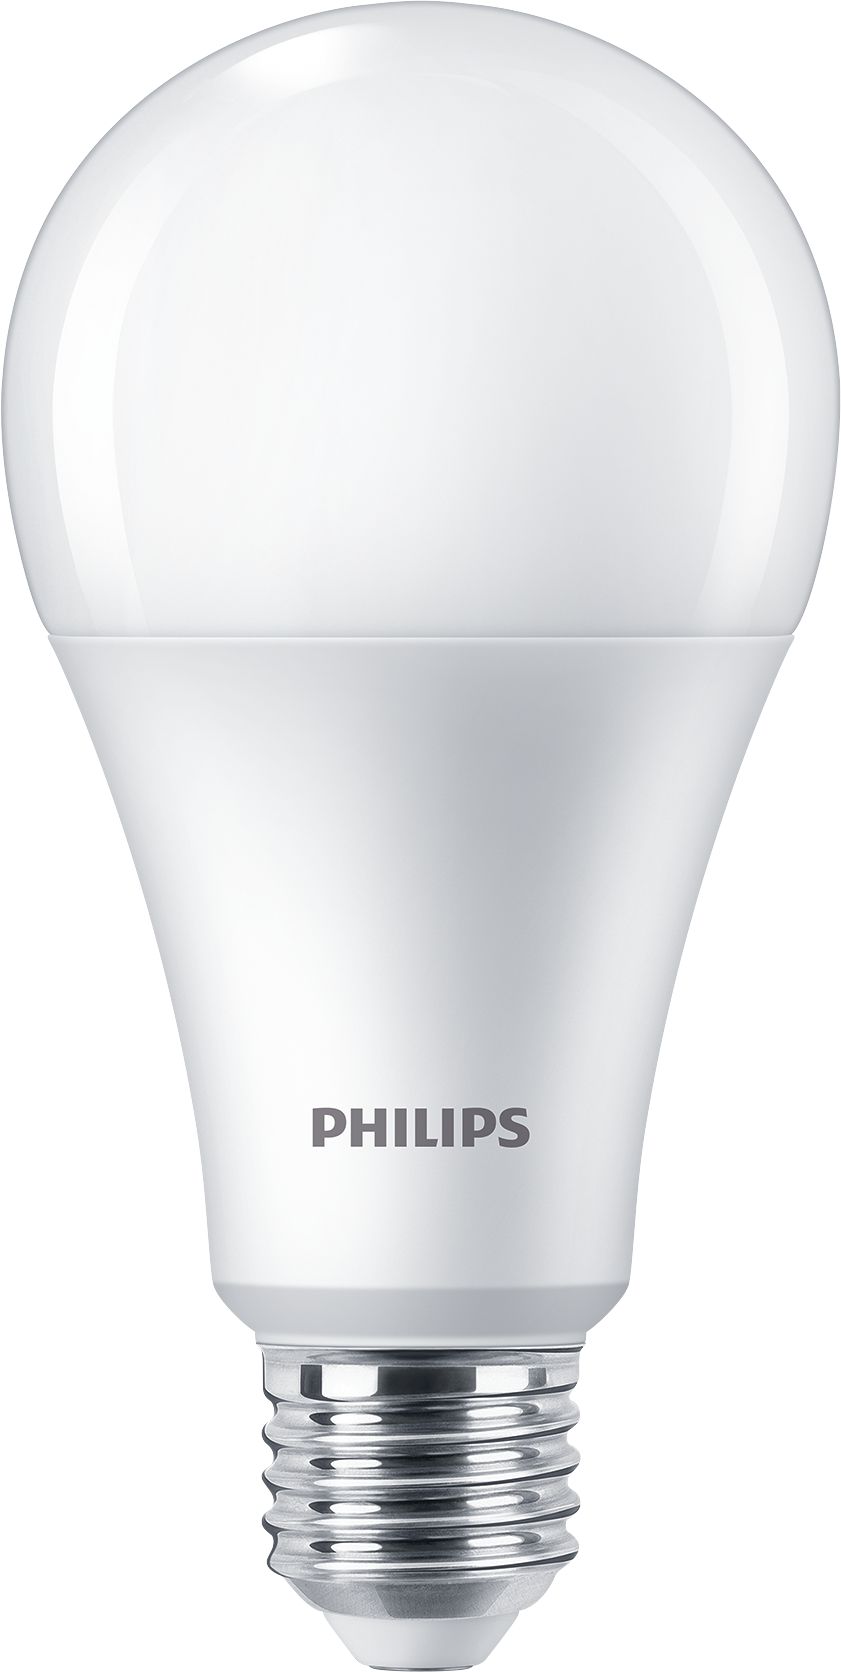 Standard Led Bulbs 6979538 Philips, Commercial Fluorescent Light Fixtures Parts List Pdf